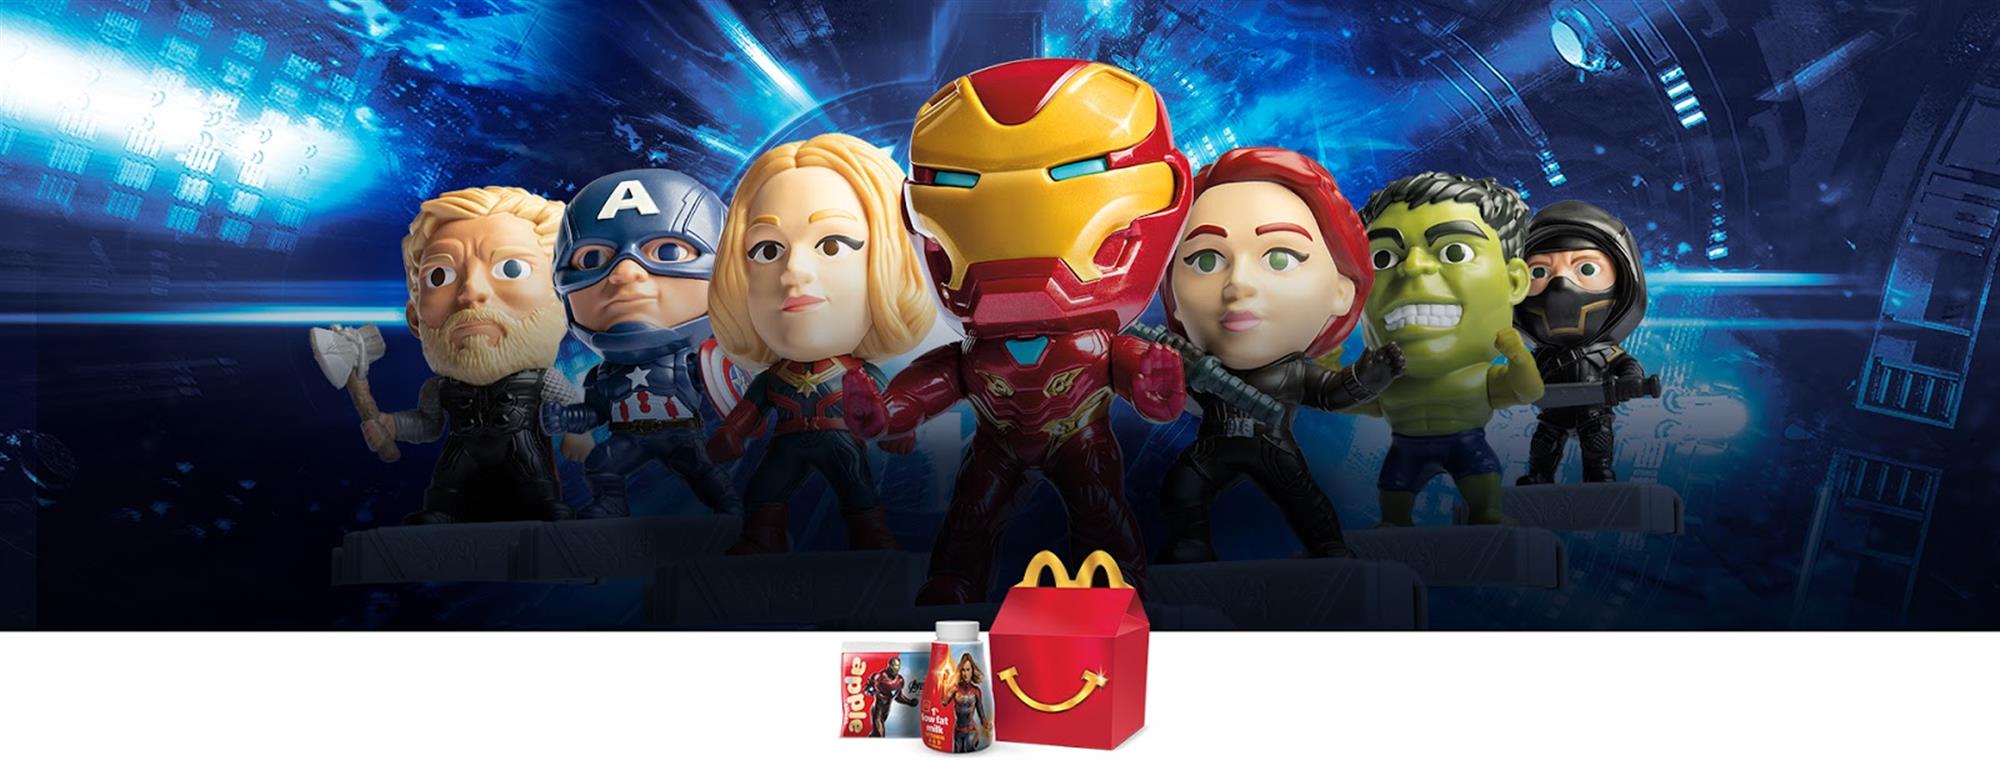 Hulk Marvel McDonalds Happy Meal toy Avengers EndGame Movie Collectors 2 figures 